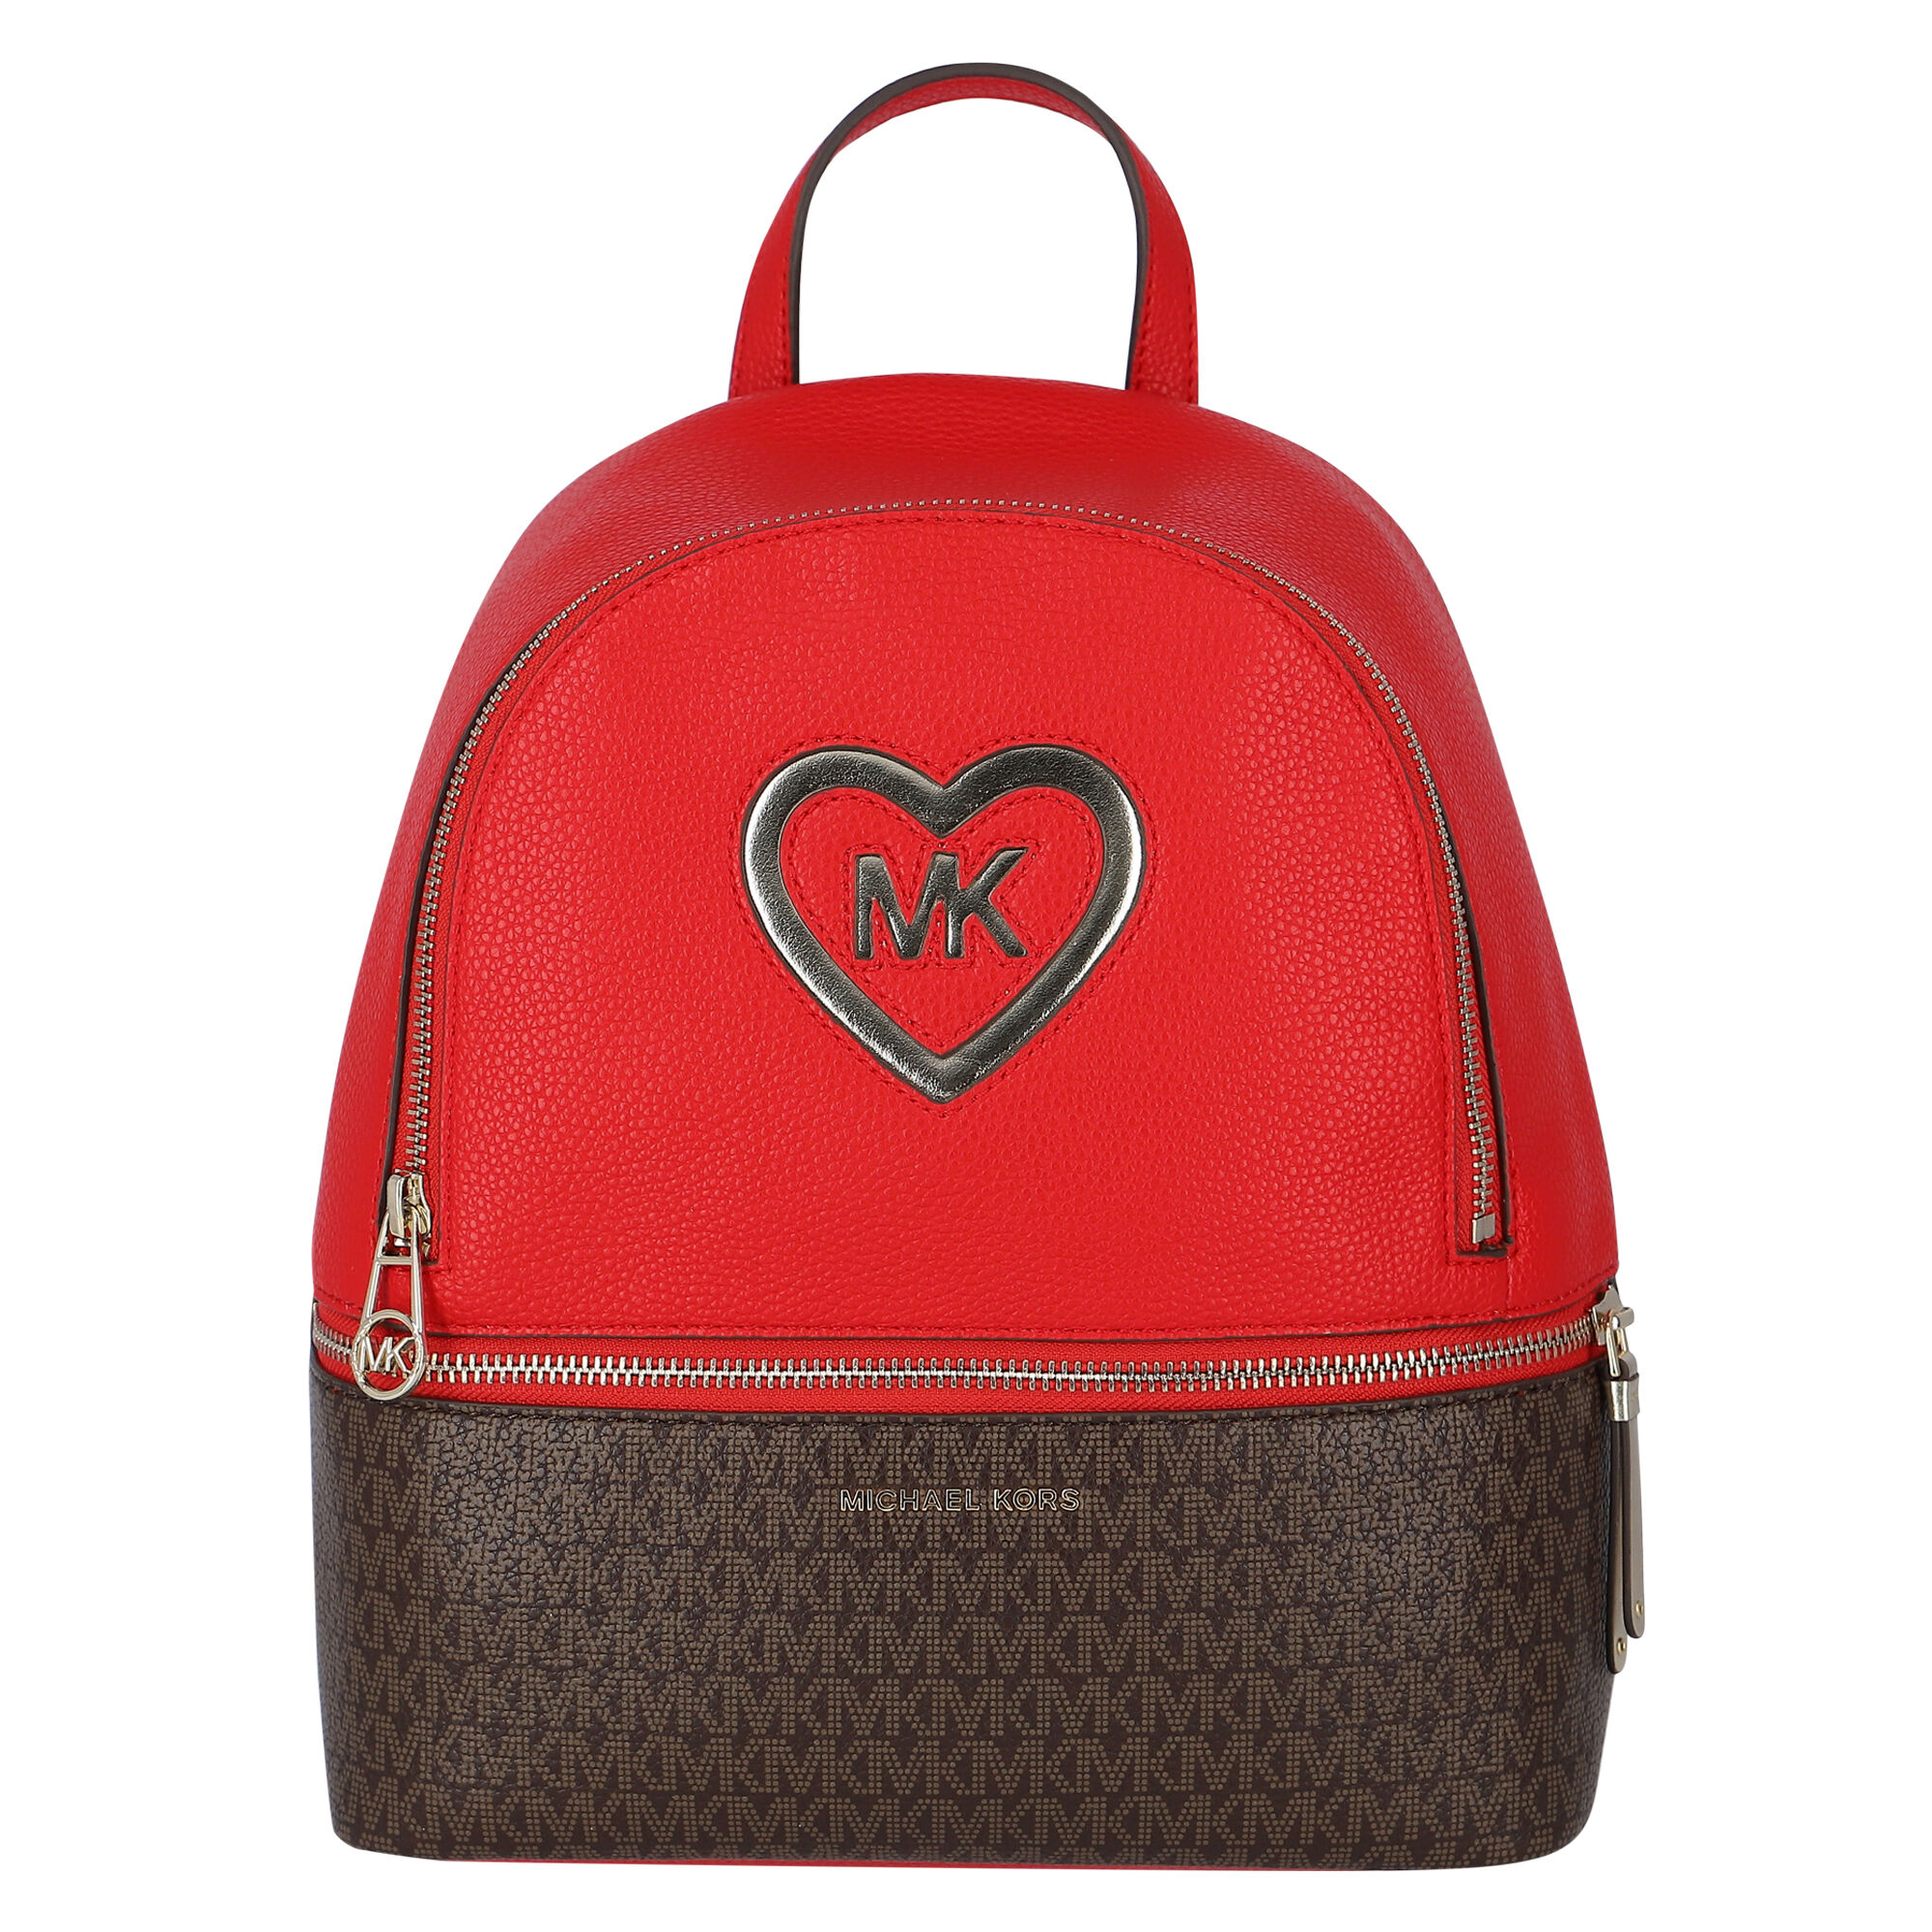 NWT Michael Kors Signature Rhea Zip Medium Backpack Bag Pleated Crimson Red  Gold  eBay